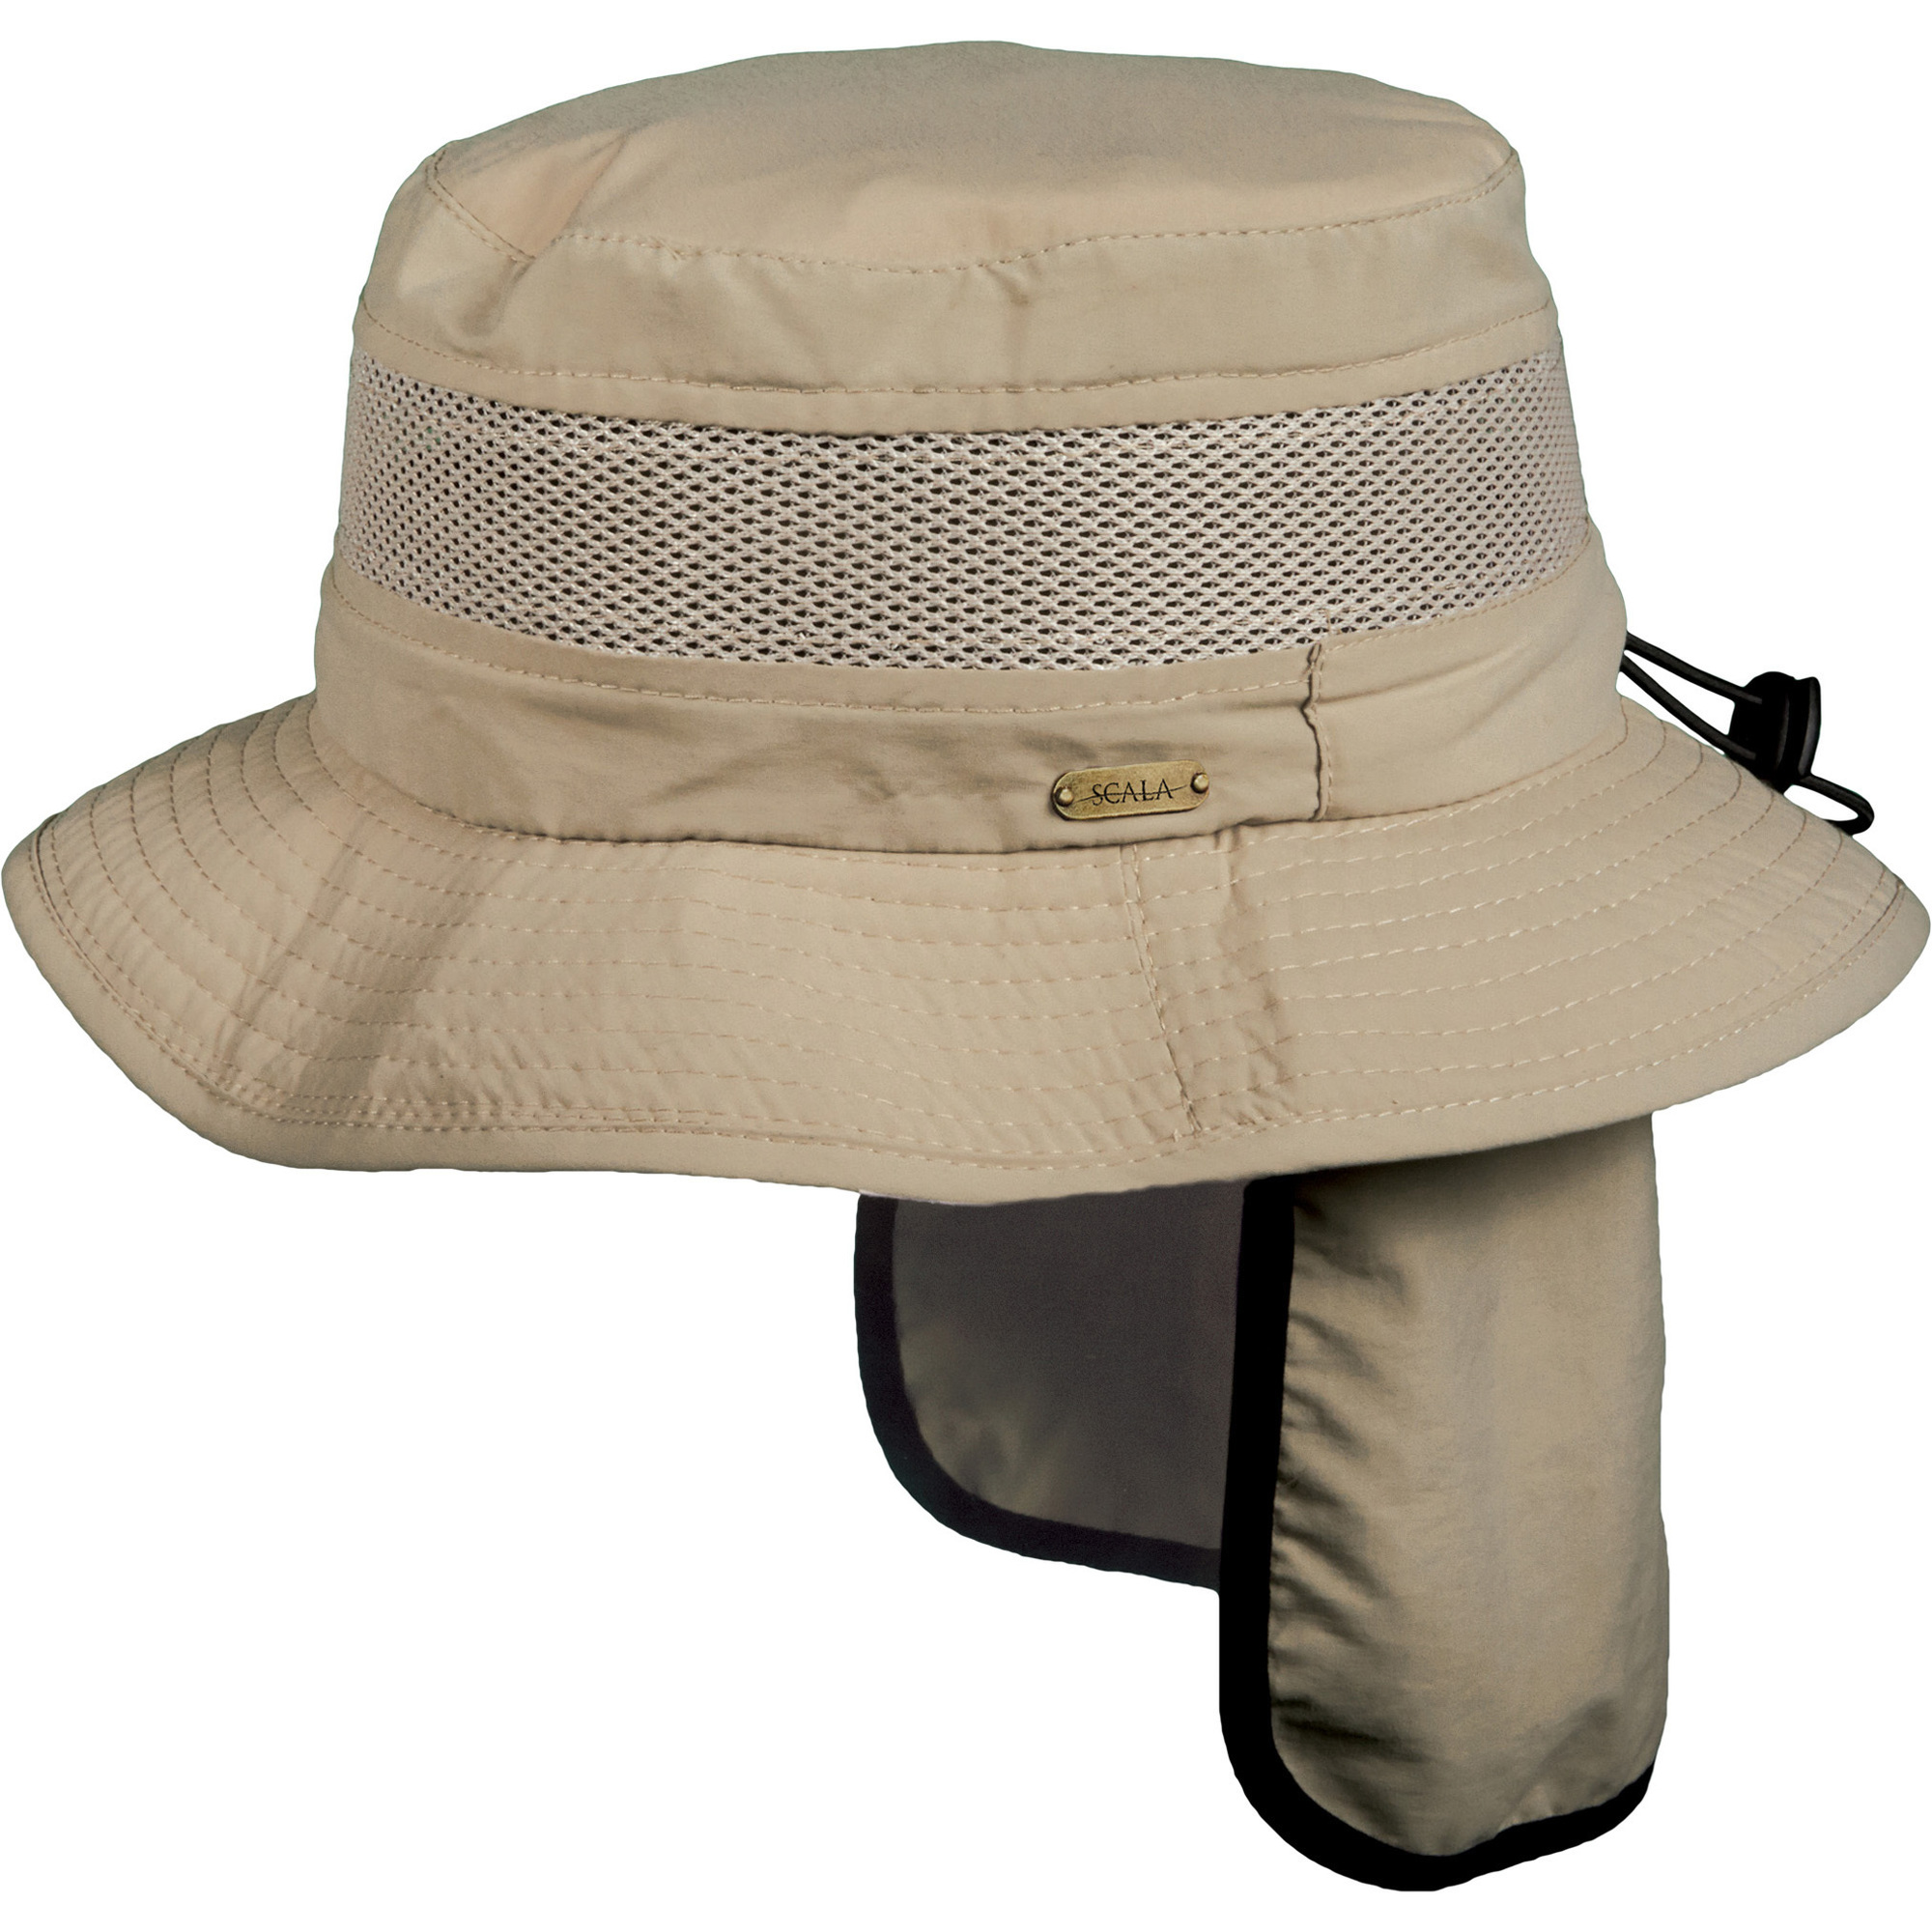 Dorfman Pacific, No Fly Zone Nylon Bug Repellent Hat, Size XL, Color KHAKI, Hat Style Hat, Model NT199-KAKI4